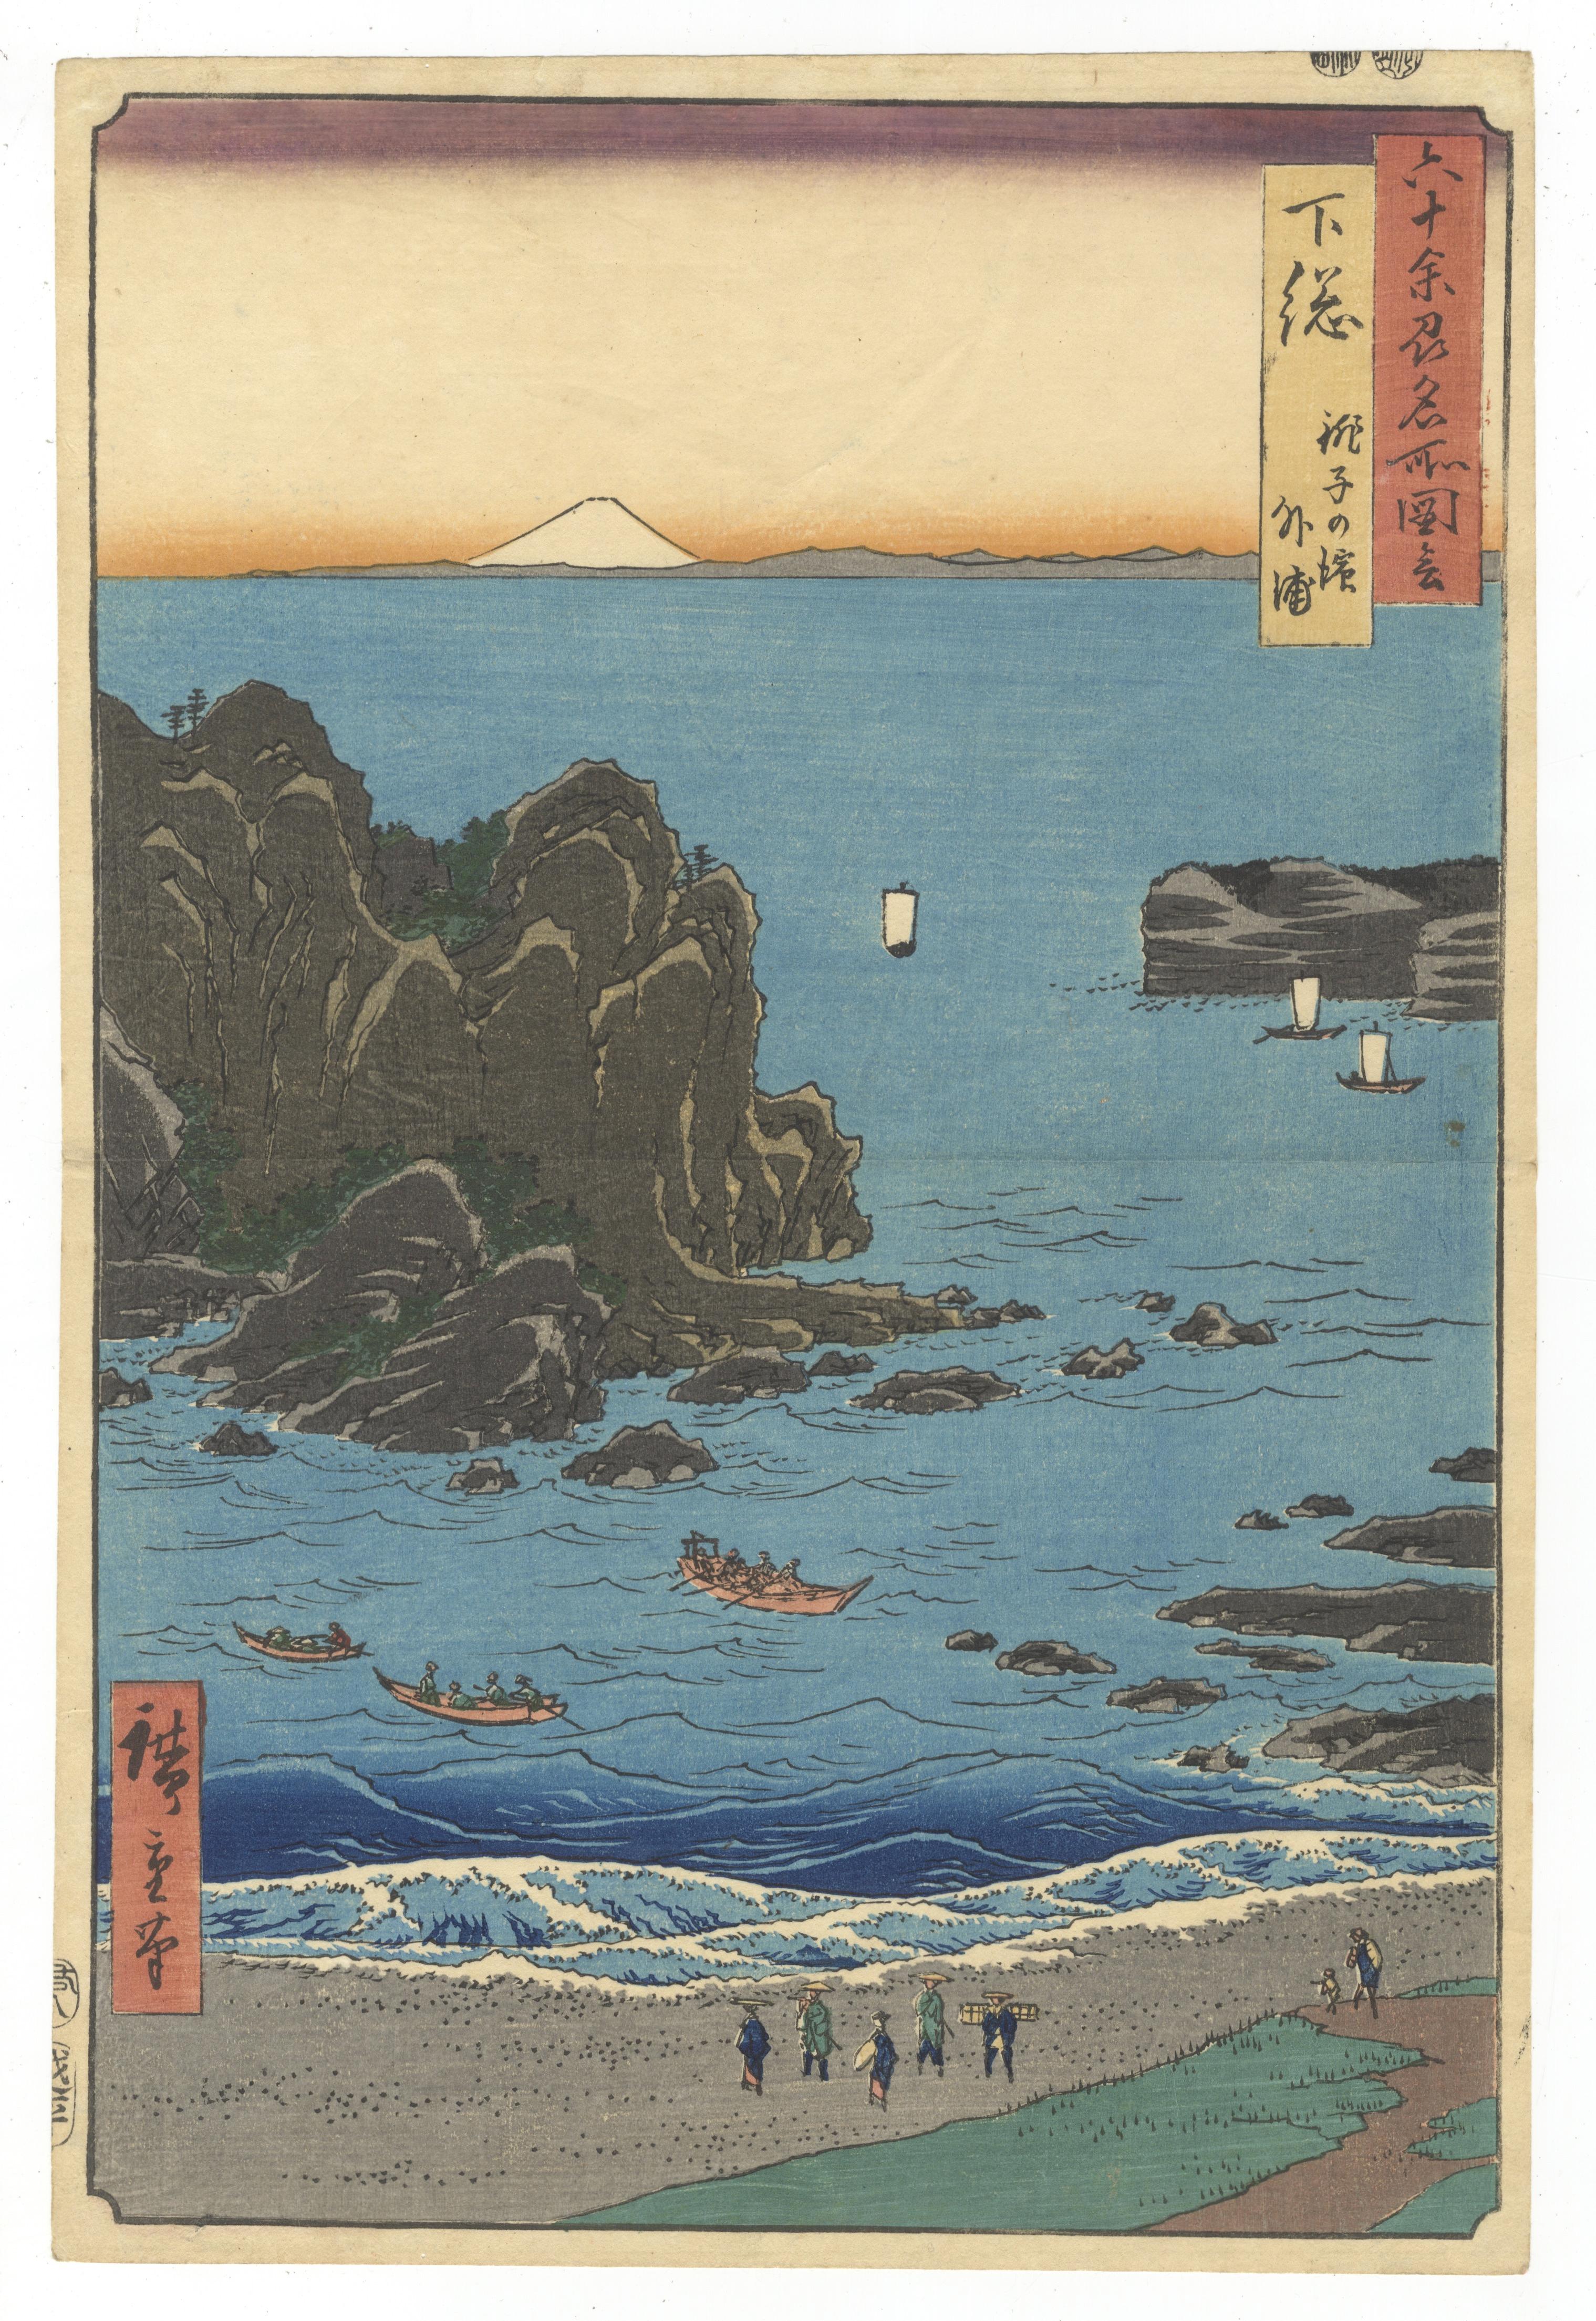 Utagawa Hiroshige (Ando Hiroshige) Figurative Print - Hiroshige I, Shimousa Province, Mount Fuji, 60 Odd Provinces, Landscape, Edo